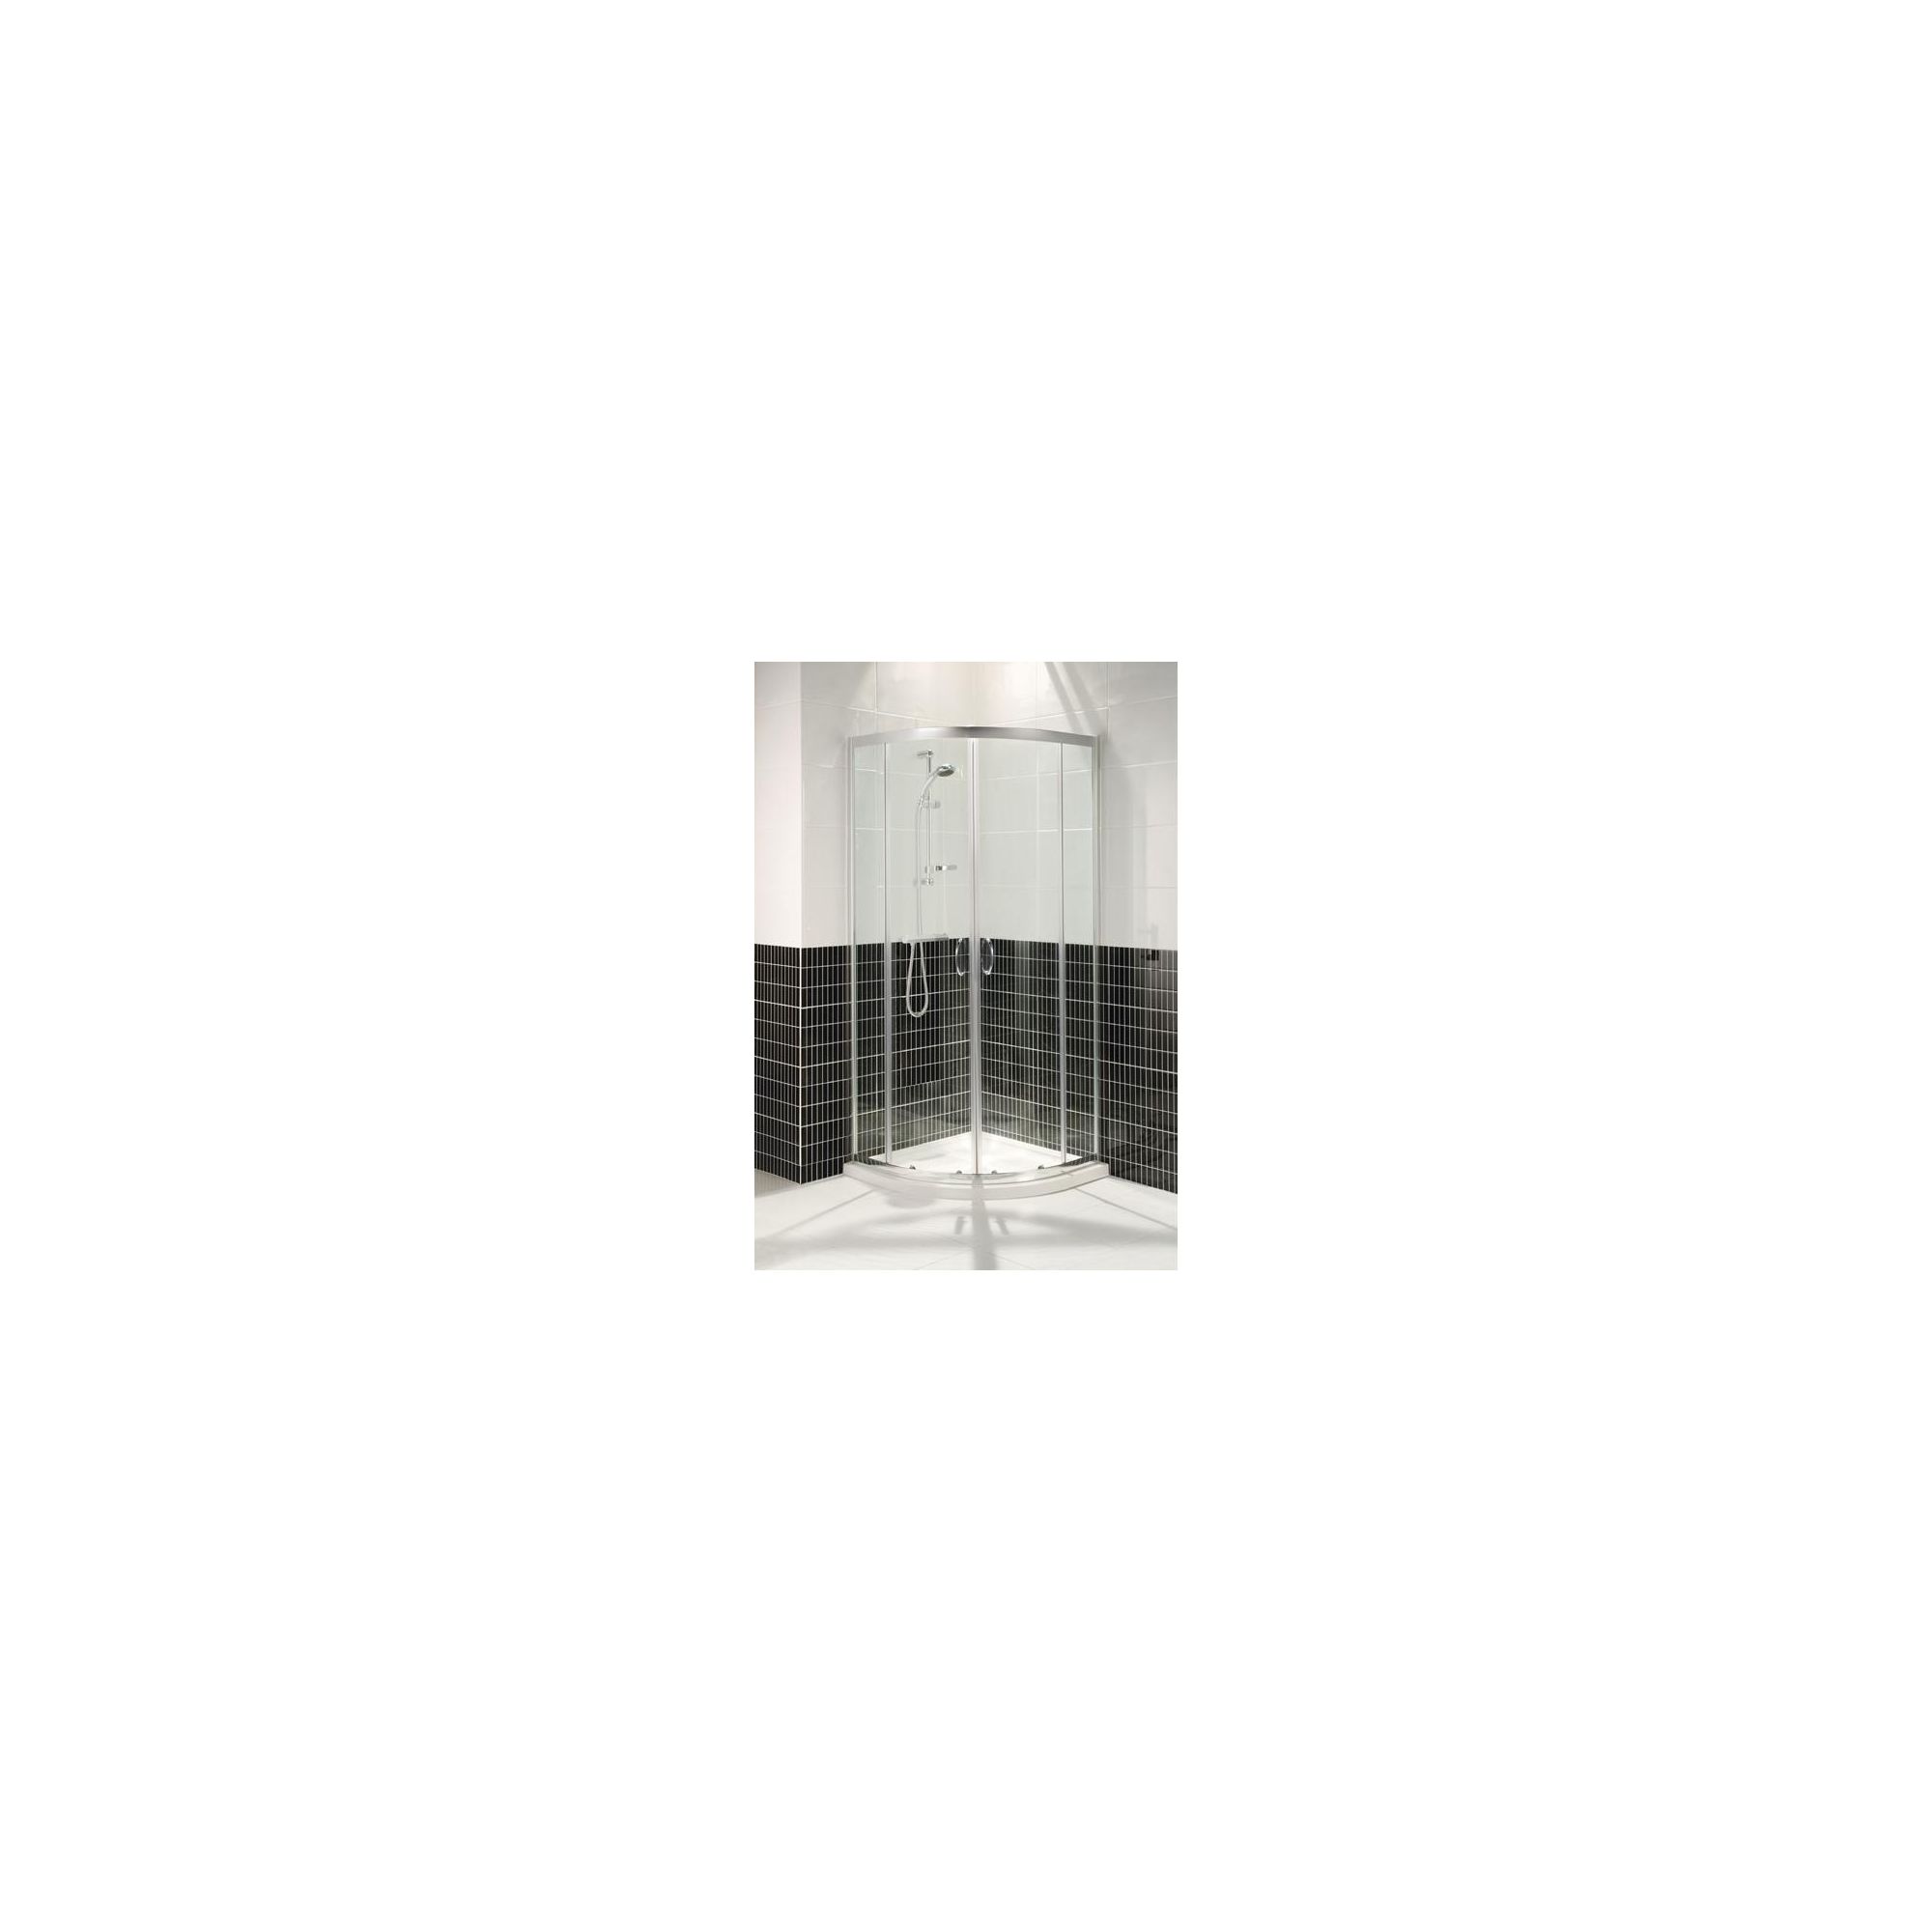 Balterley Semi-Frameless Quadrant Shower Enclosure, 900mm x 900mm, Standard Tray, 6mm Glass at Tesco Direct